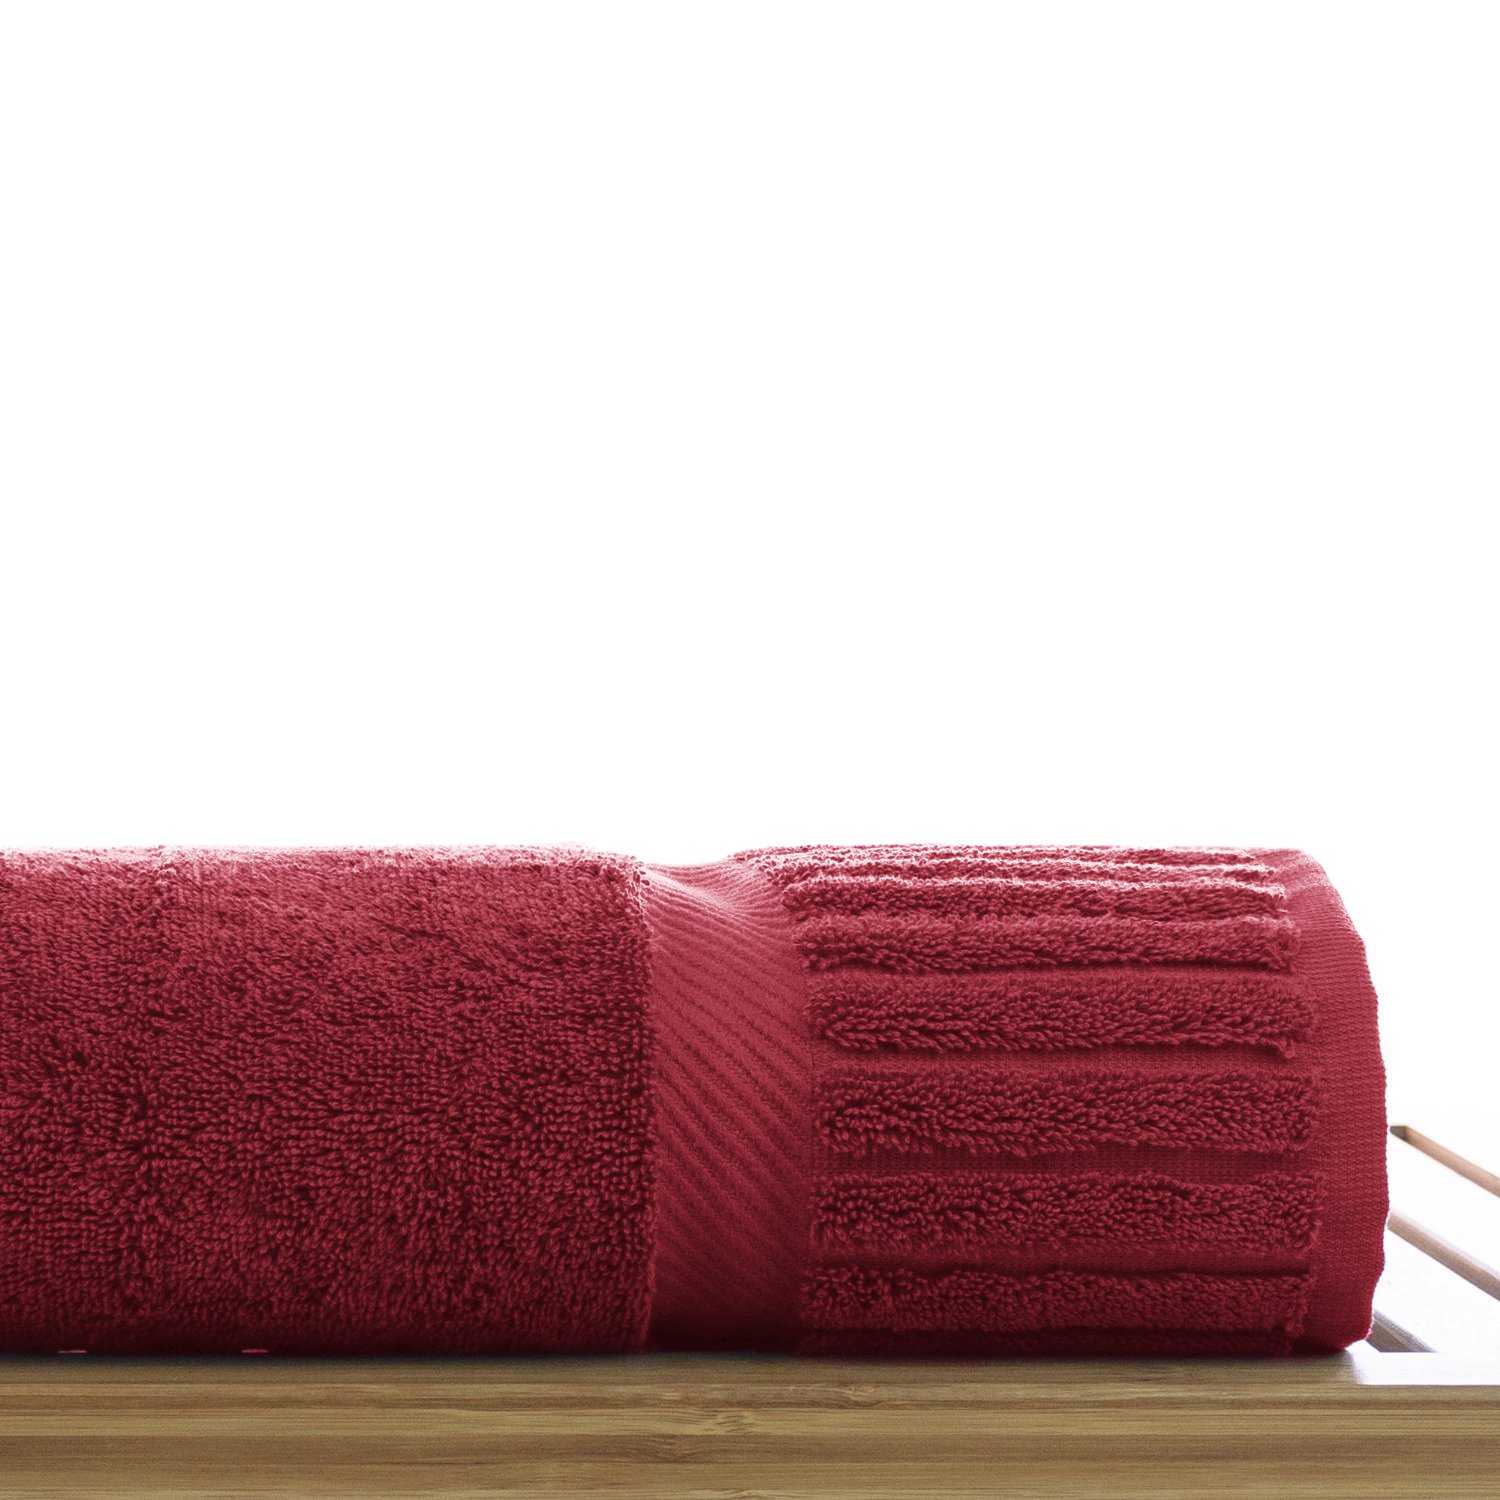 30" x 58" - 18 lbs/doz - %100 Turkish Cotton Cranberry Bath Towel - Piano Border-Robemart.com